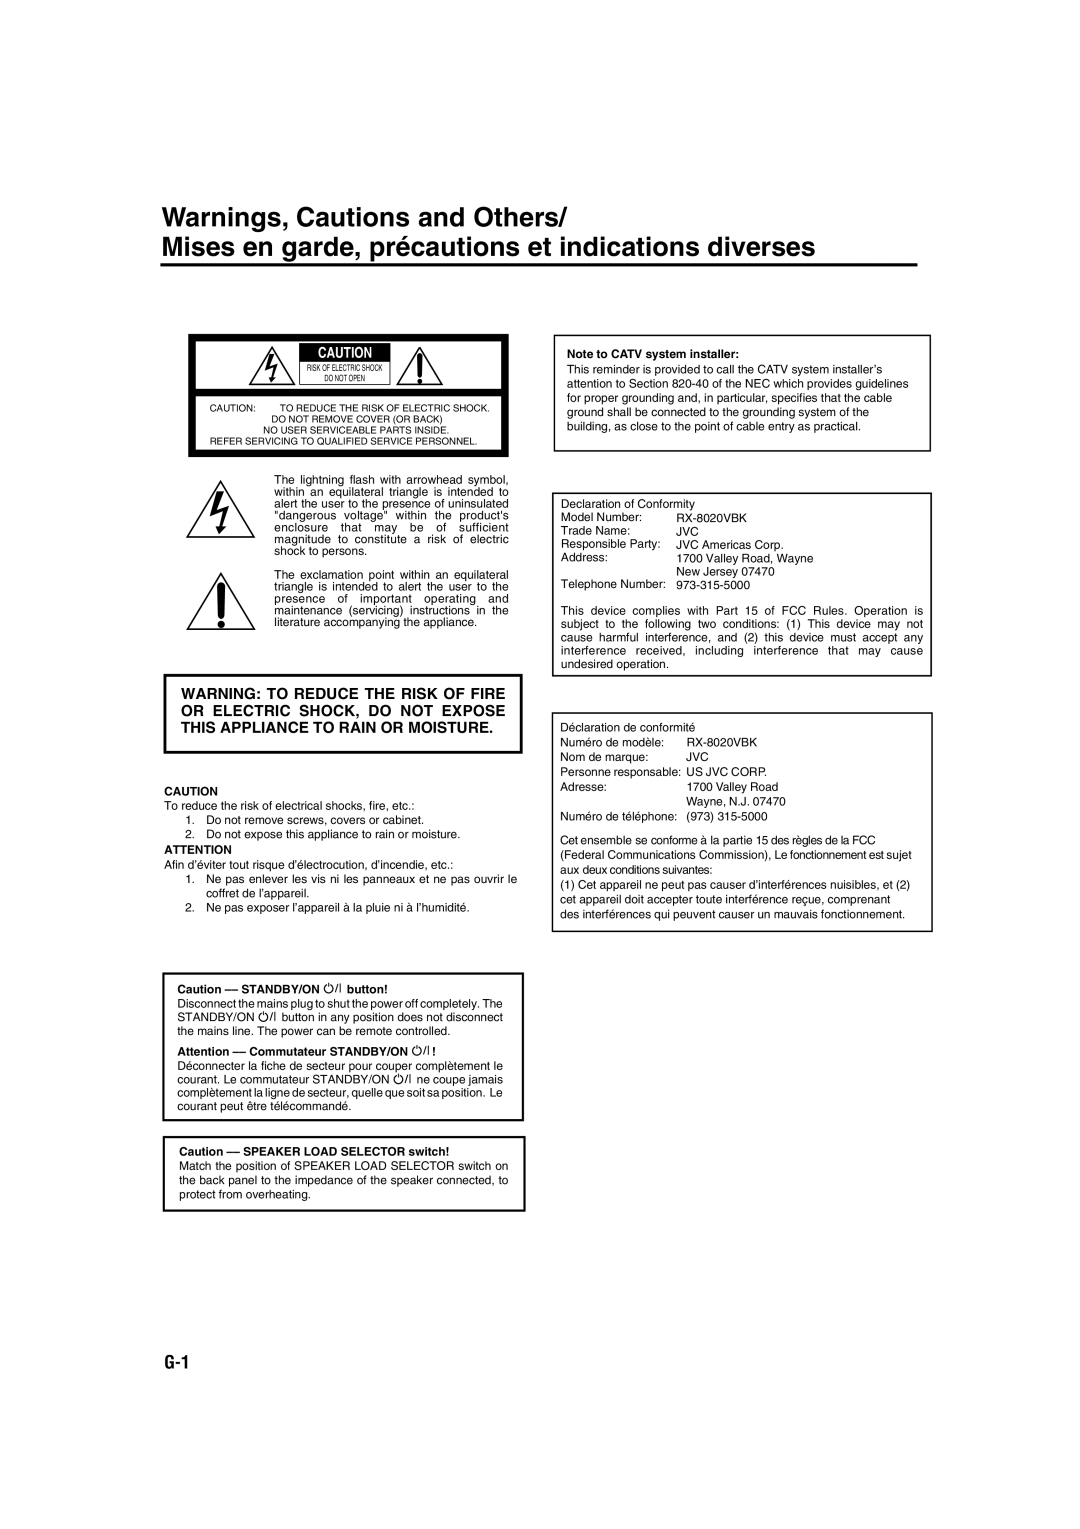 JVC RX-8020VBK manual Warnings, Cautions and Others, Mises en garde, précautions et indications diverses 